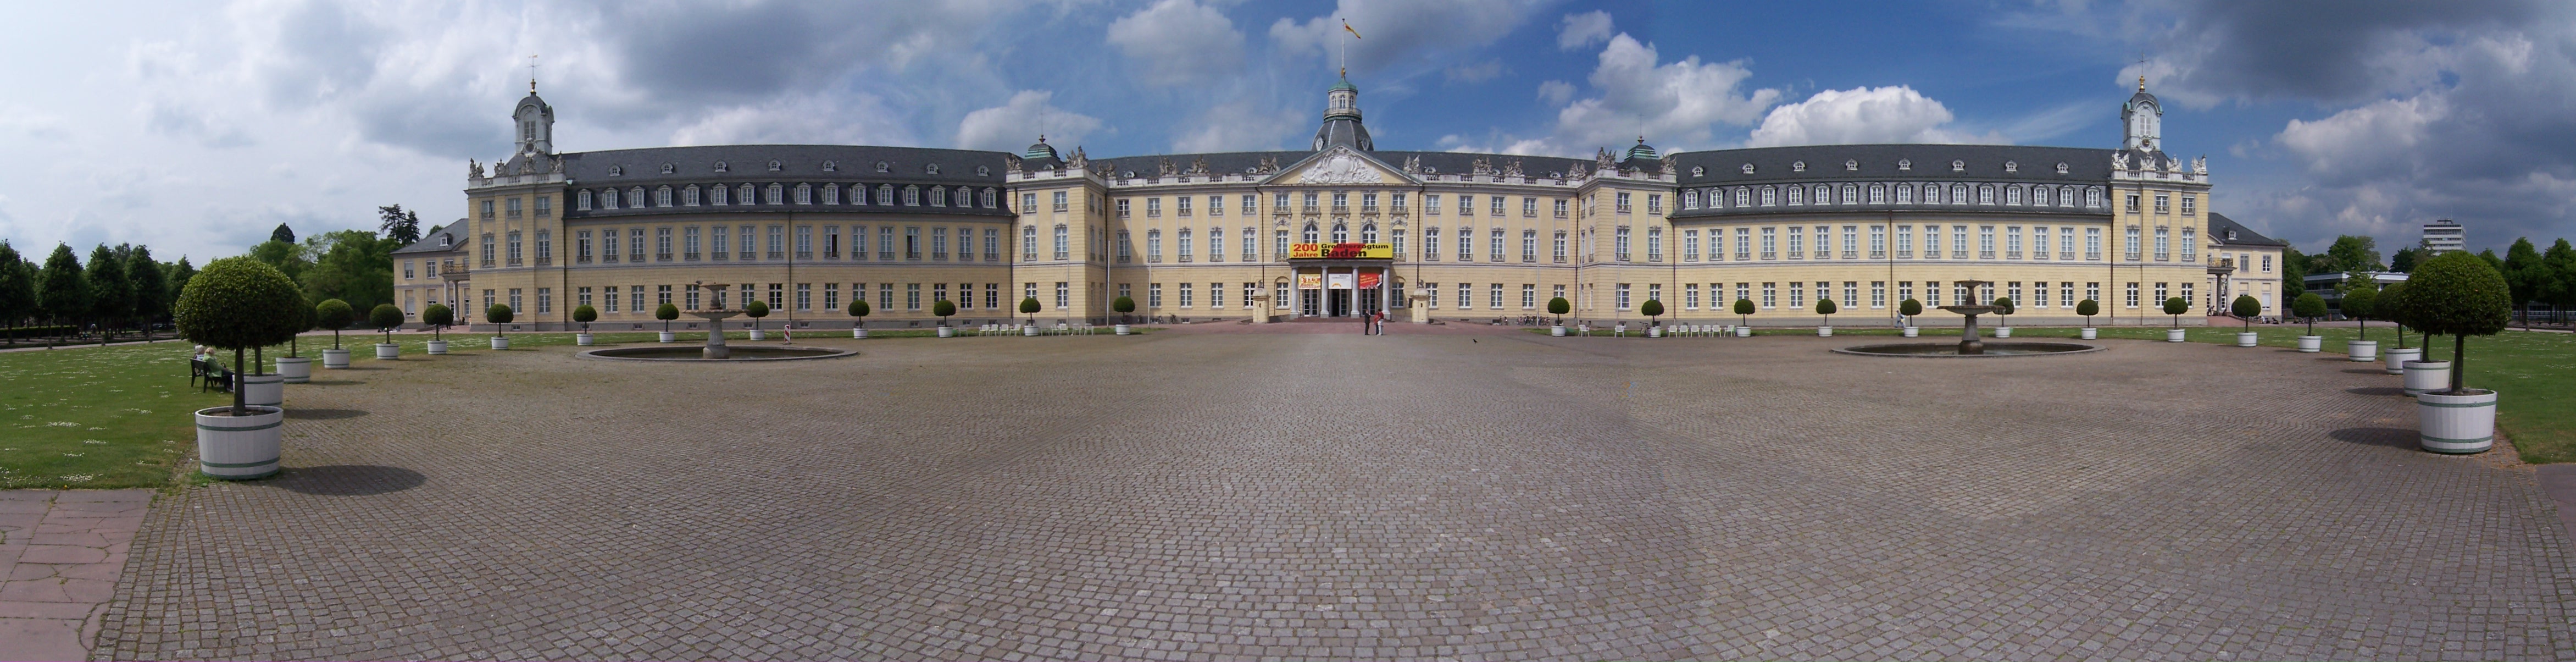 Nice Images Collection: Karlsruhe Palace Desktop Wallpapers